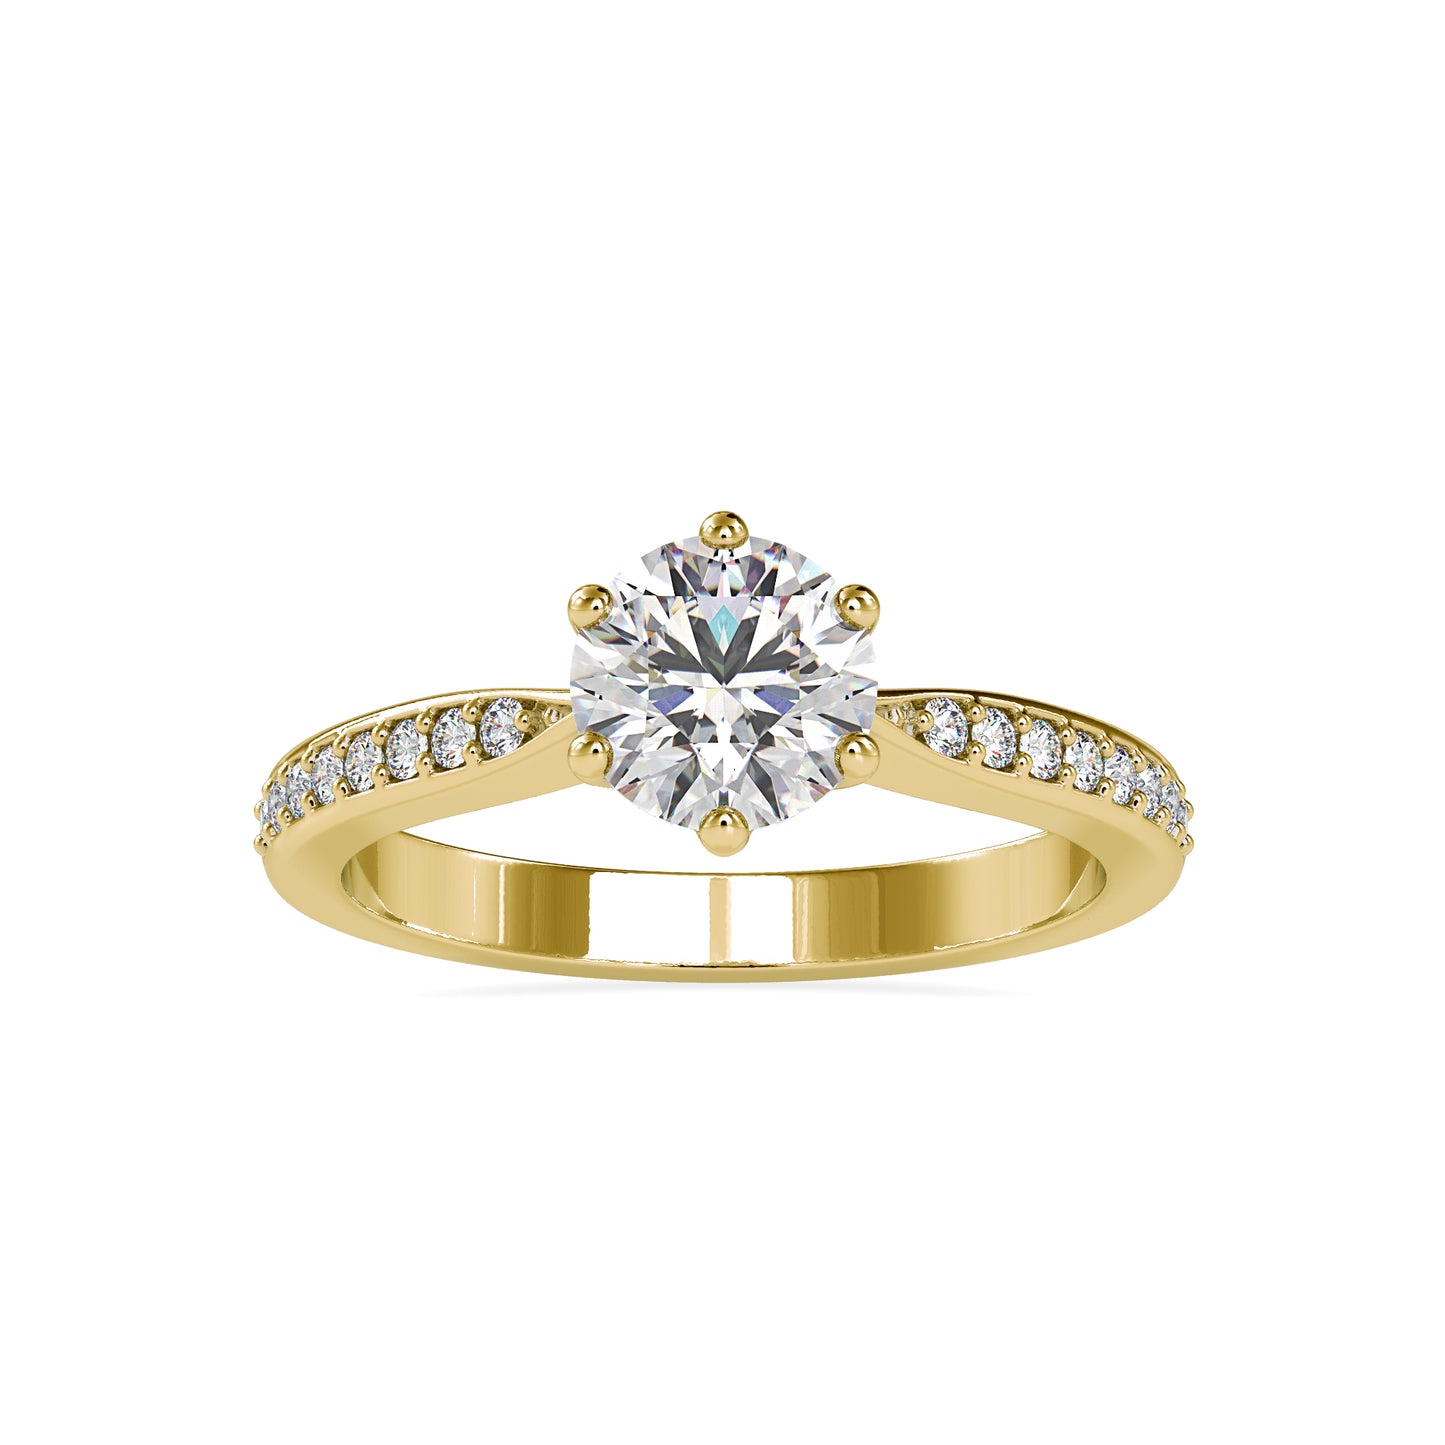 Round Cut 1.28CT Diamond Engagement Ring